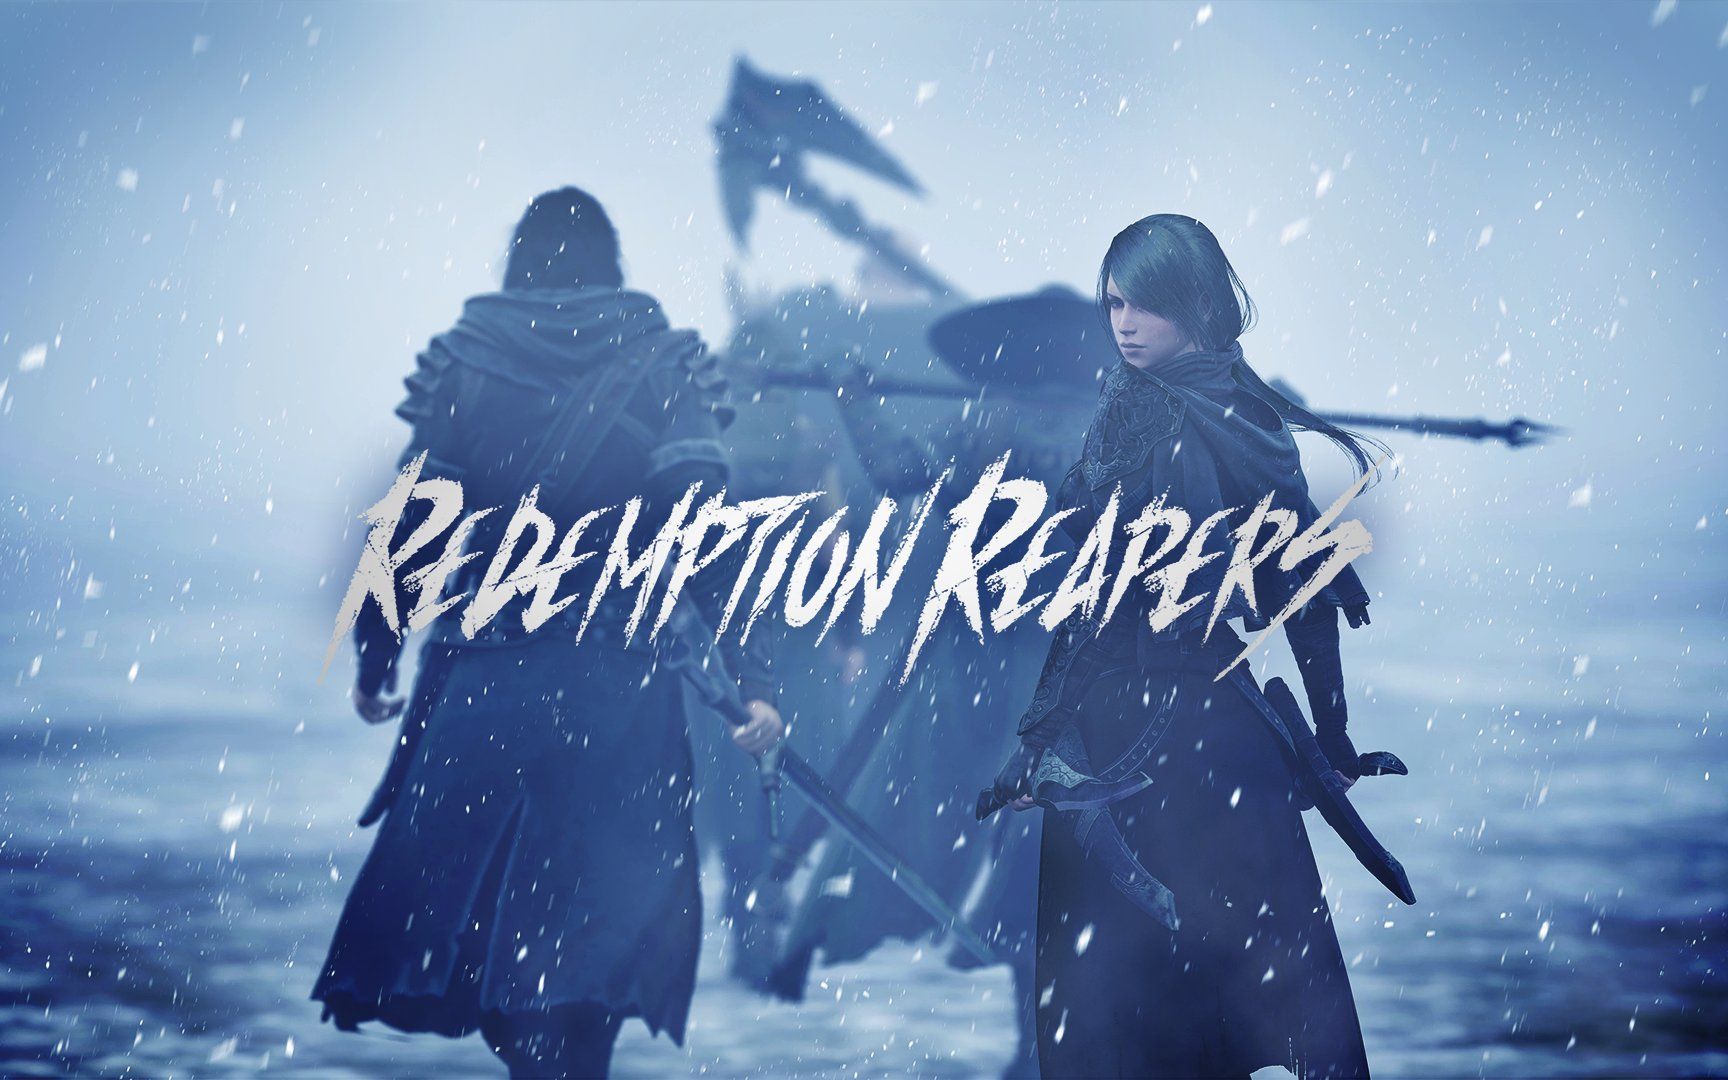 《Redemption Reapers》一款黑暗幻想战术RPG，将于2023年2月登陆任天堂Switch, PS4和PC 预告片